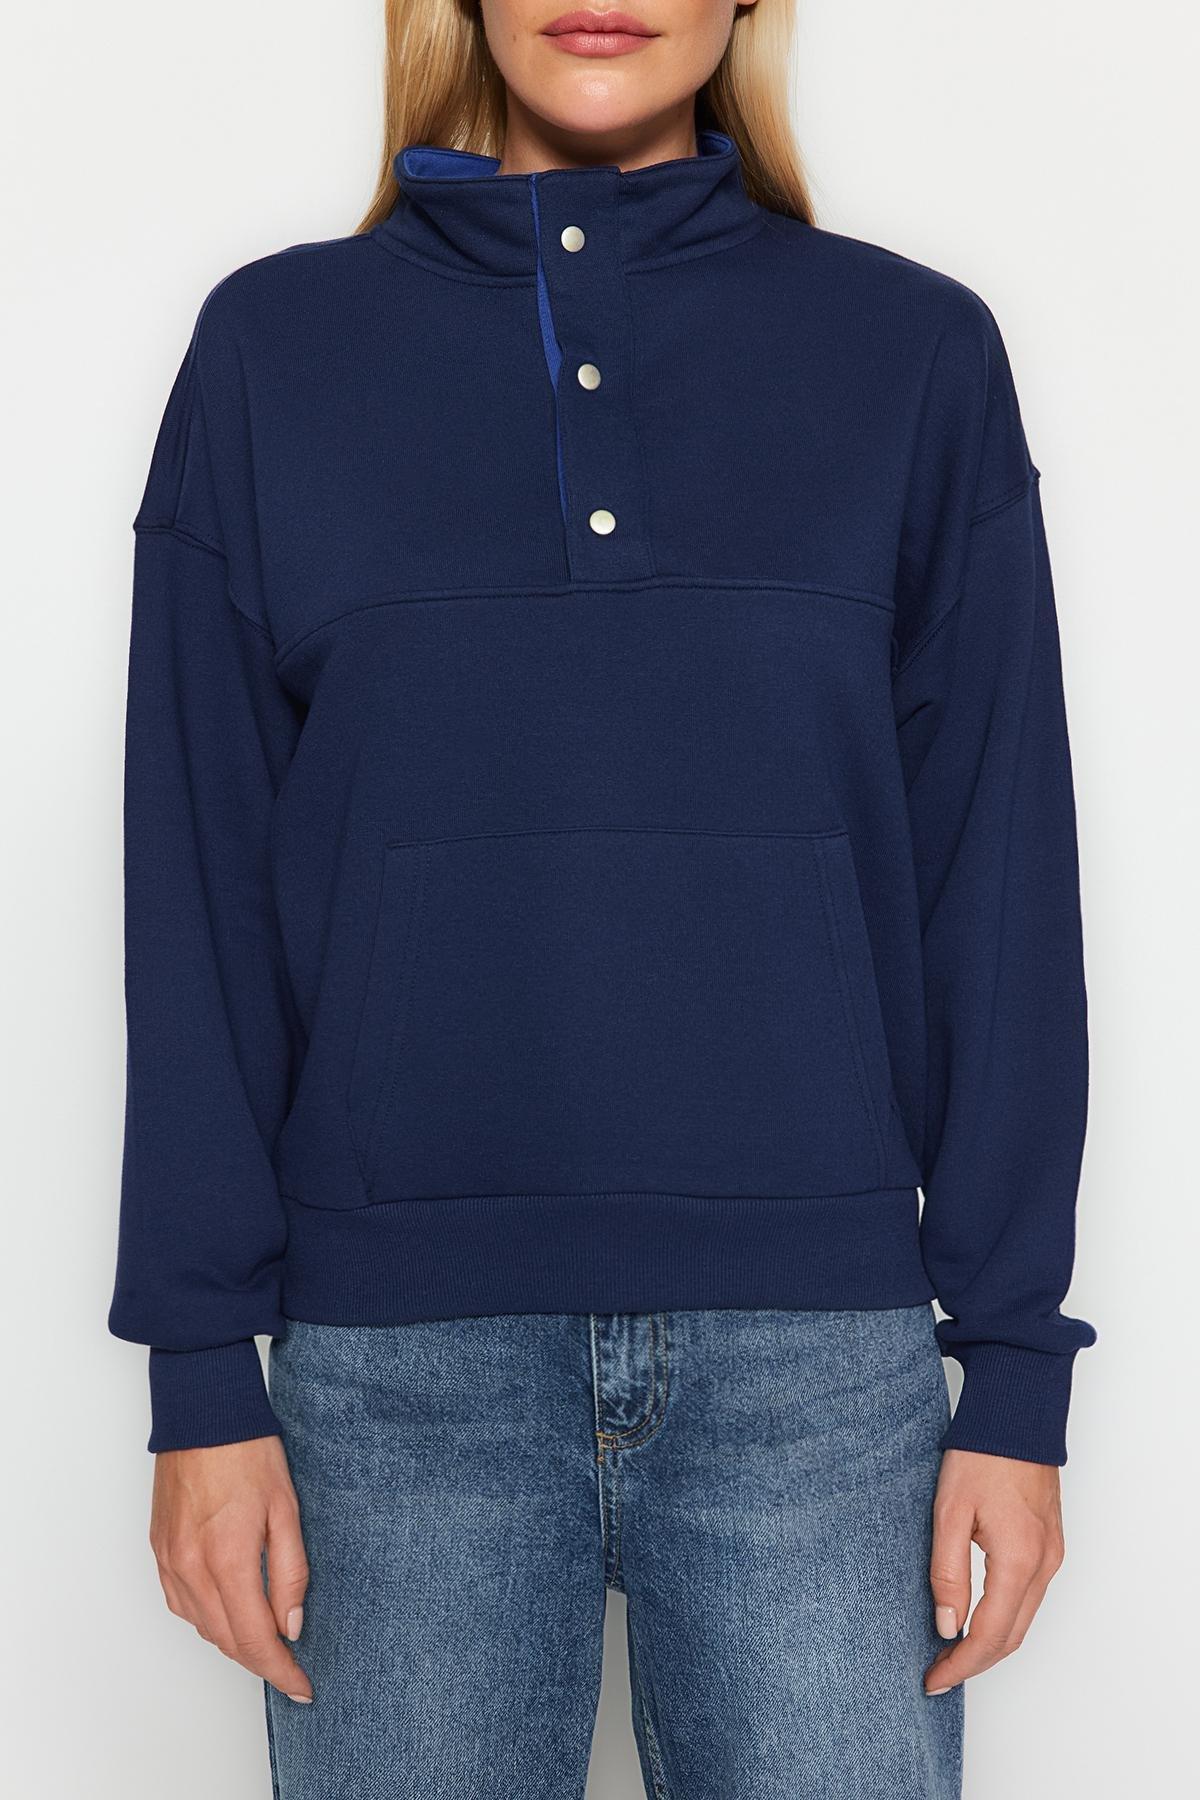 Trendyol - Blue Press-Studs Knitted Sweatshirt